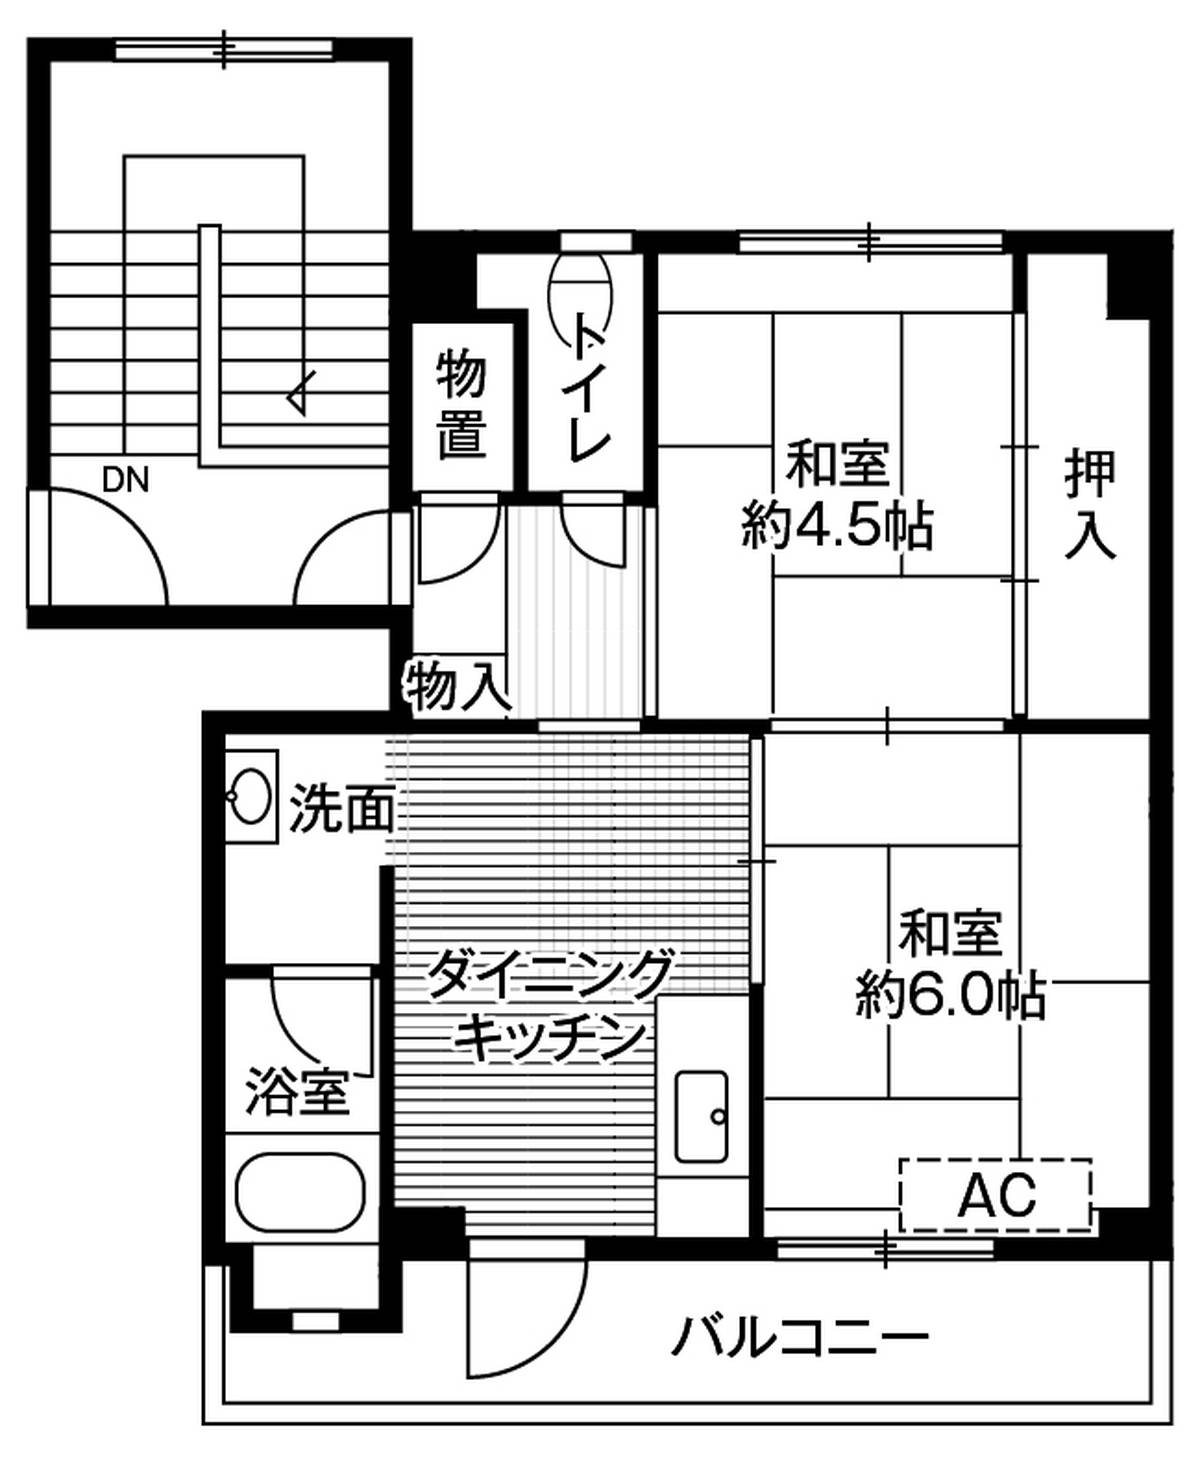 2DK floorplan of Village House Yatsuo in Toyama-shi